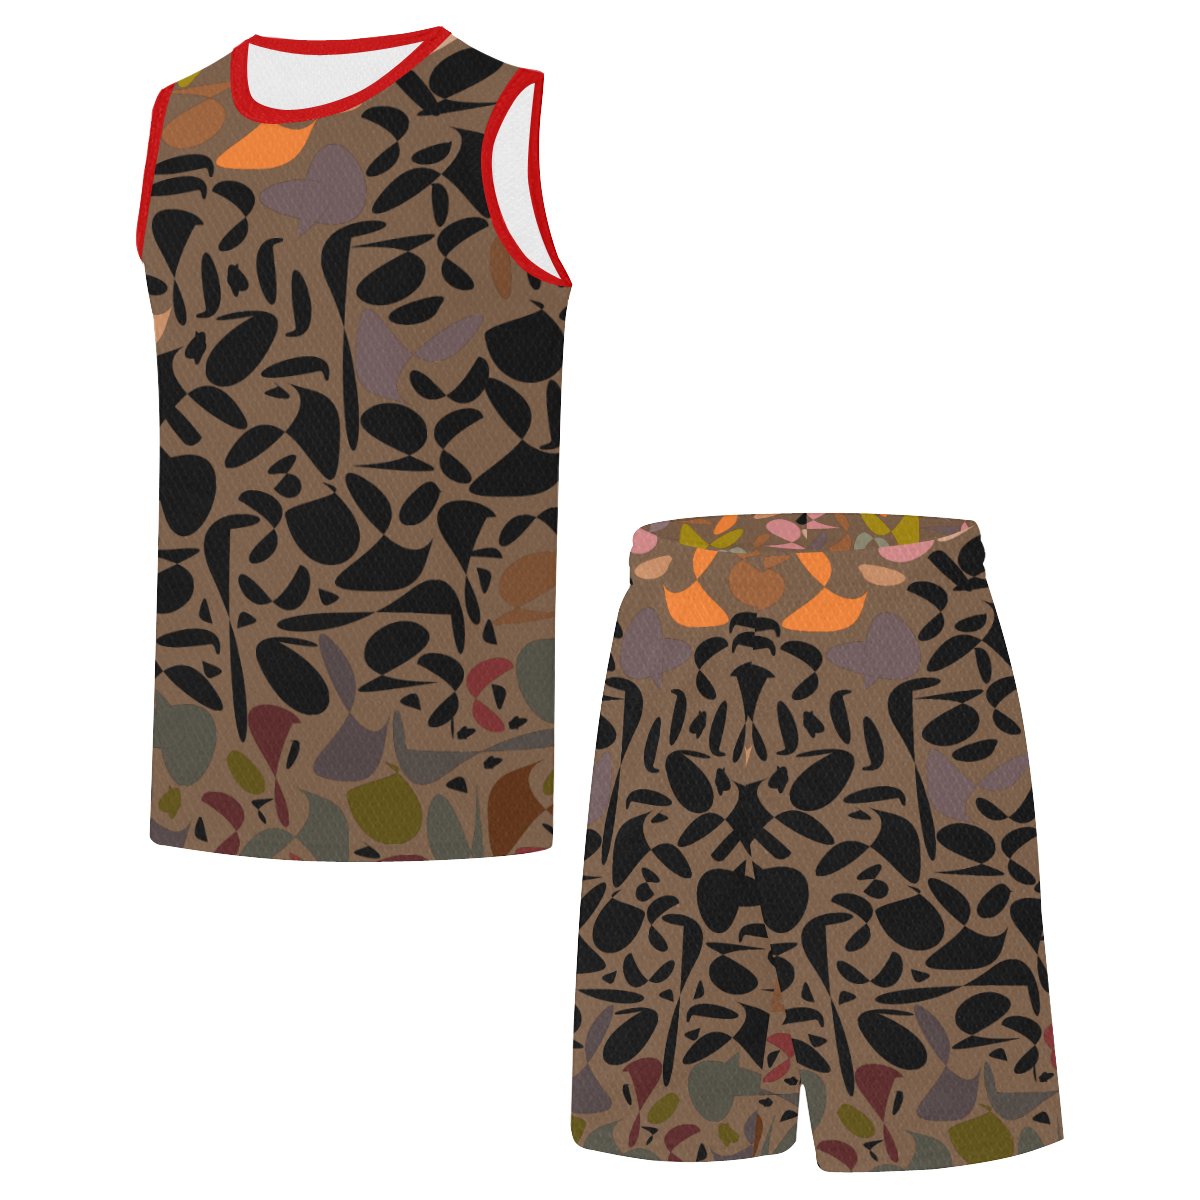 zappwaits Z6 All Over Print Basketball Uniform